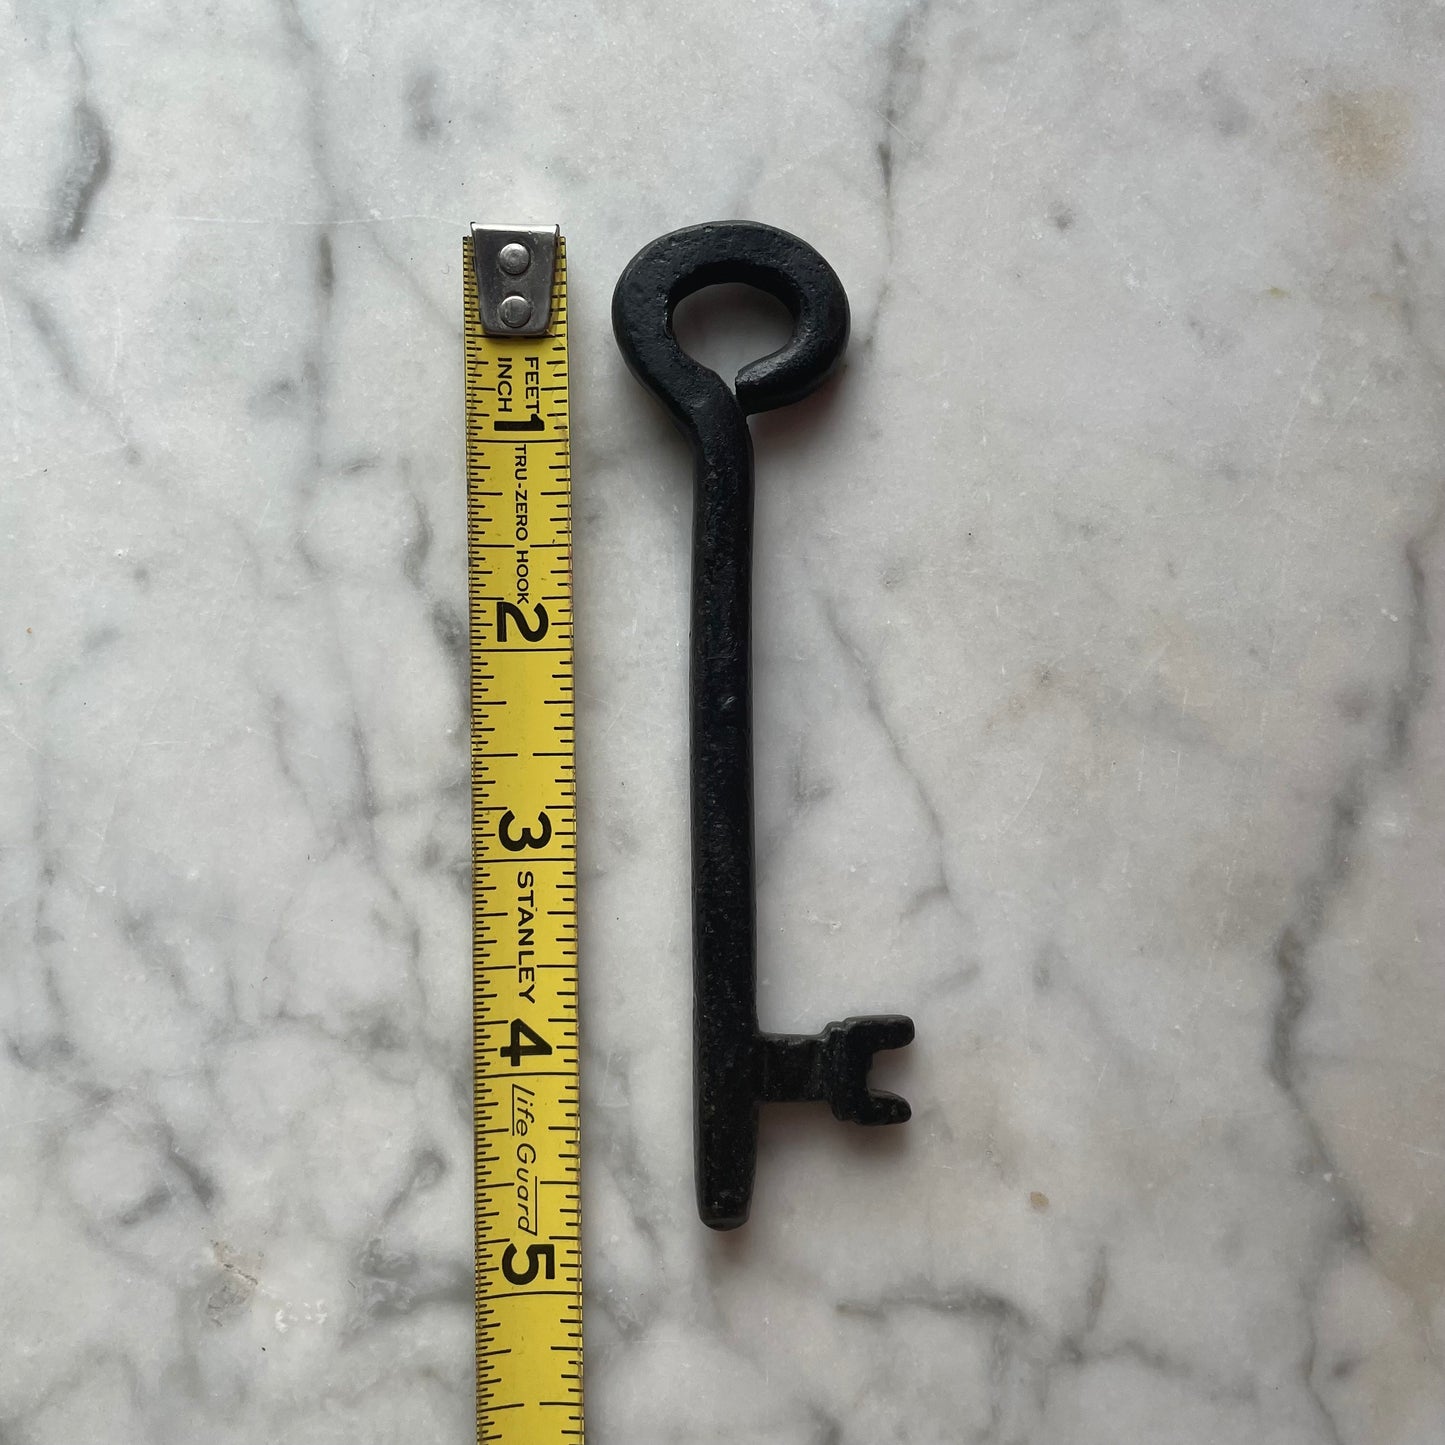 Large Antique Skeleton Key